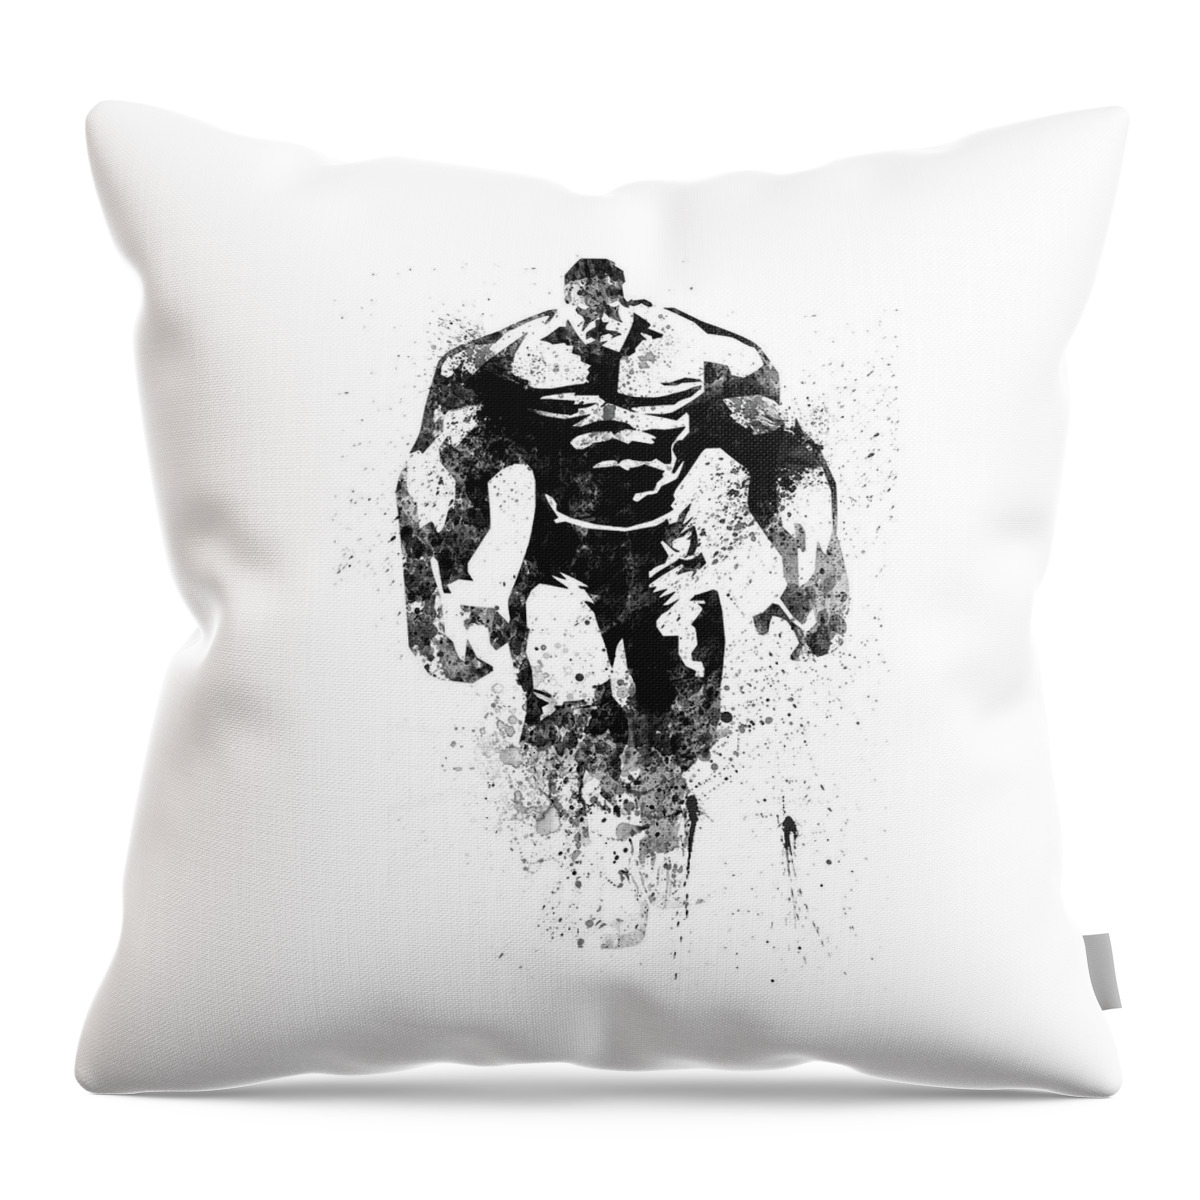 Hulk Throw Pillow featuring the digital art Hulk Watercolor by Naxart Studio